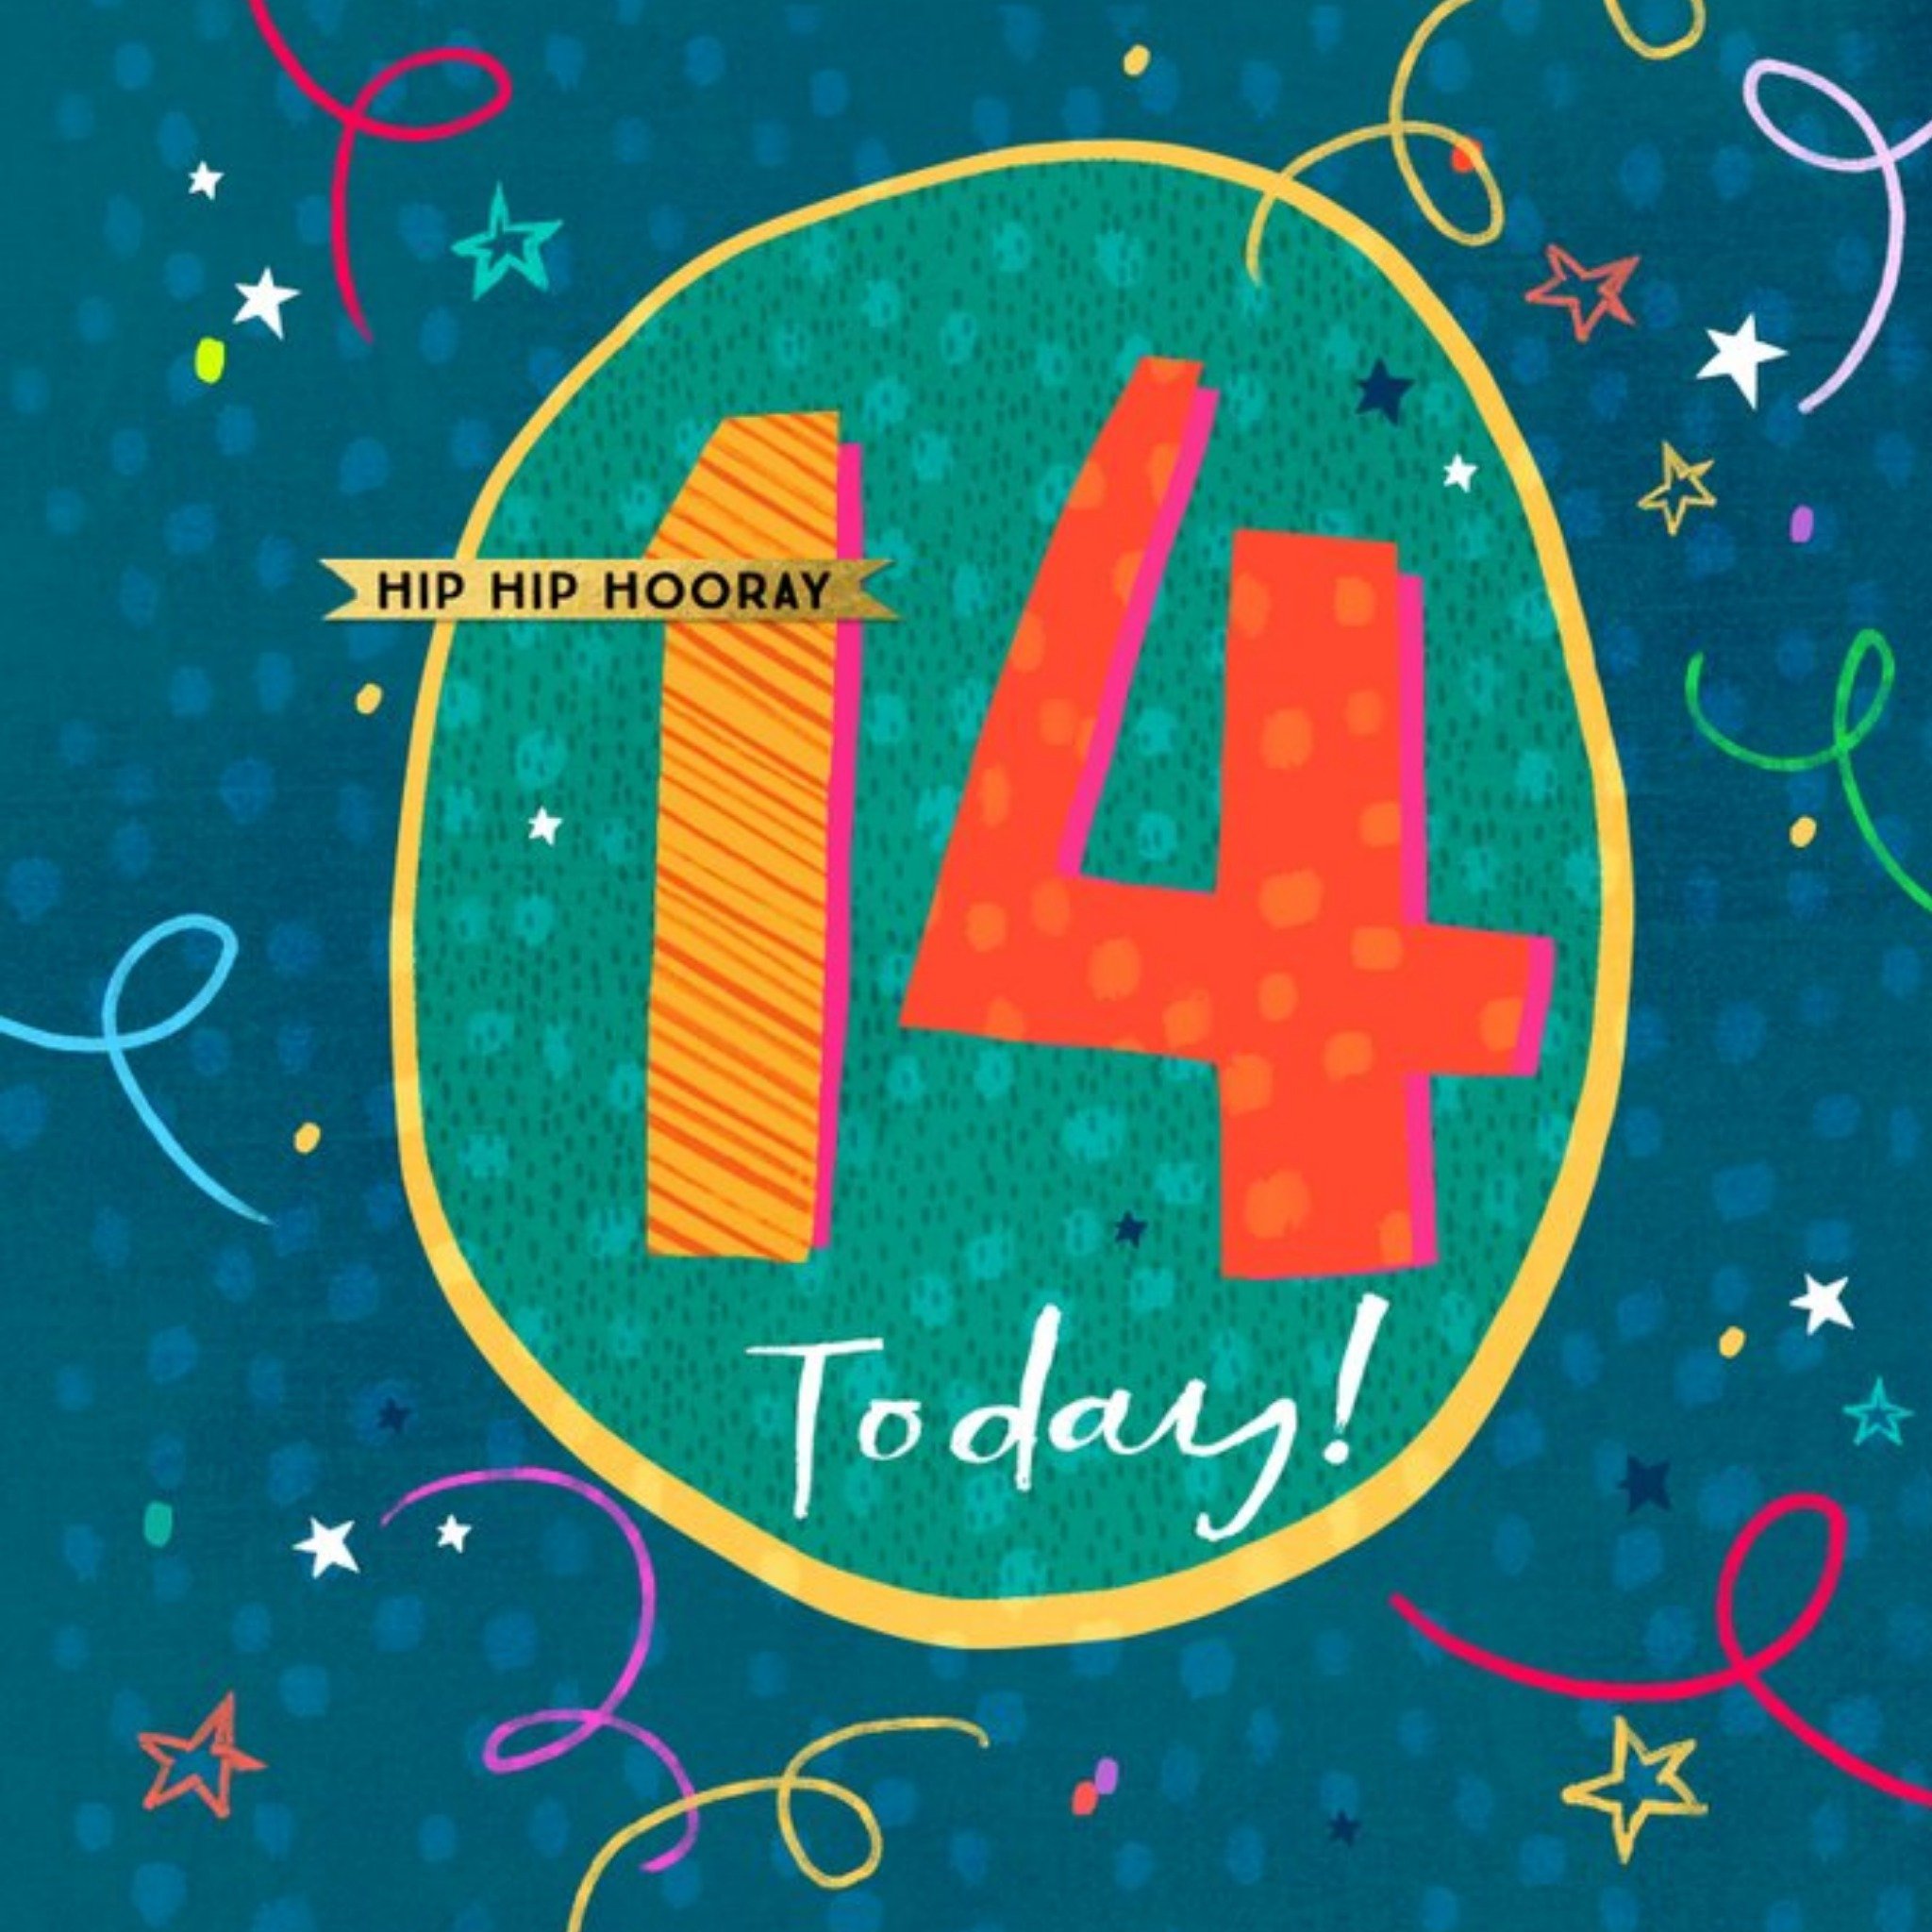 Moonpig Modern Typographic Design Hip Hip Hooray 14 Today Birthday Card, Square